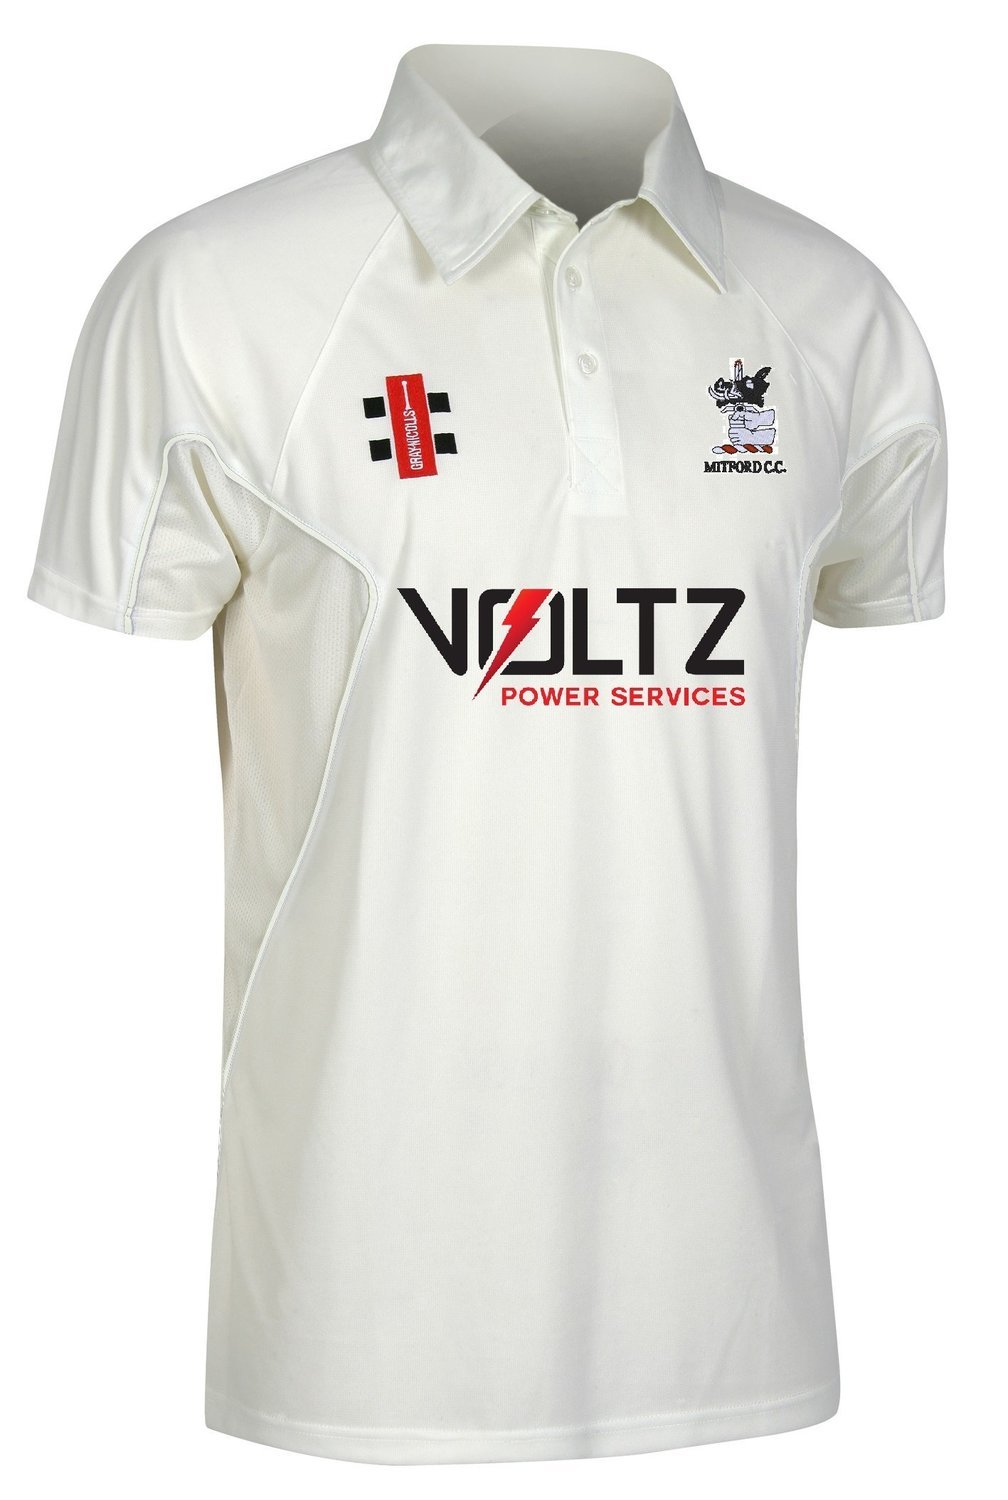 Mitford Matrix V2 Sleeve Cricket Shirt Adult